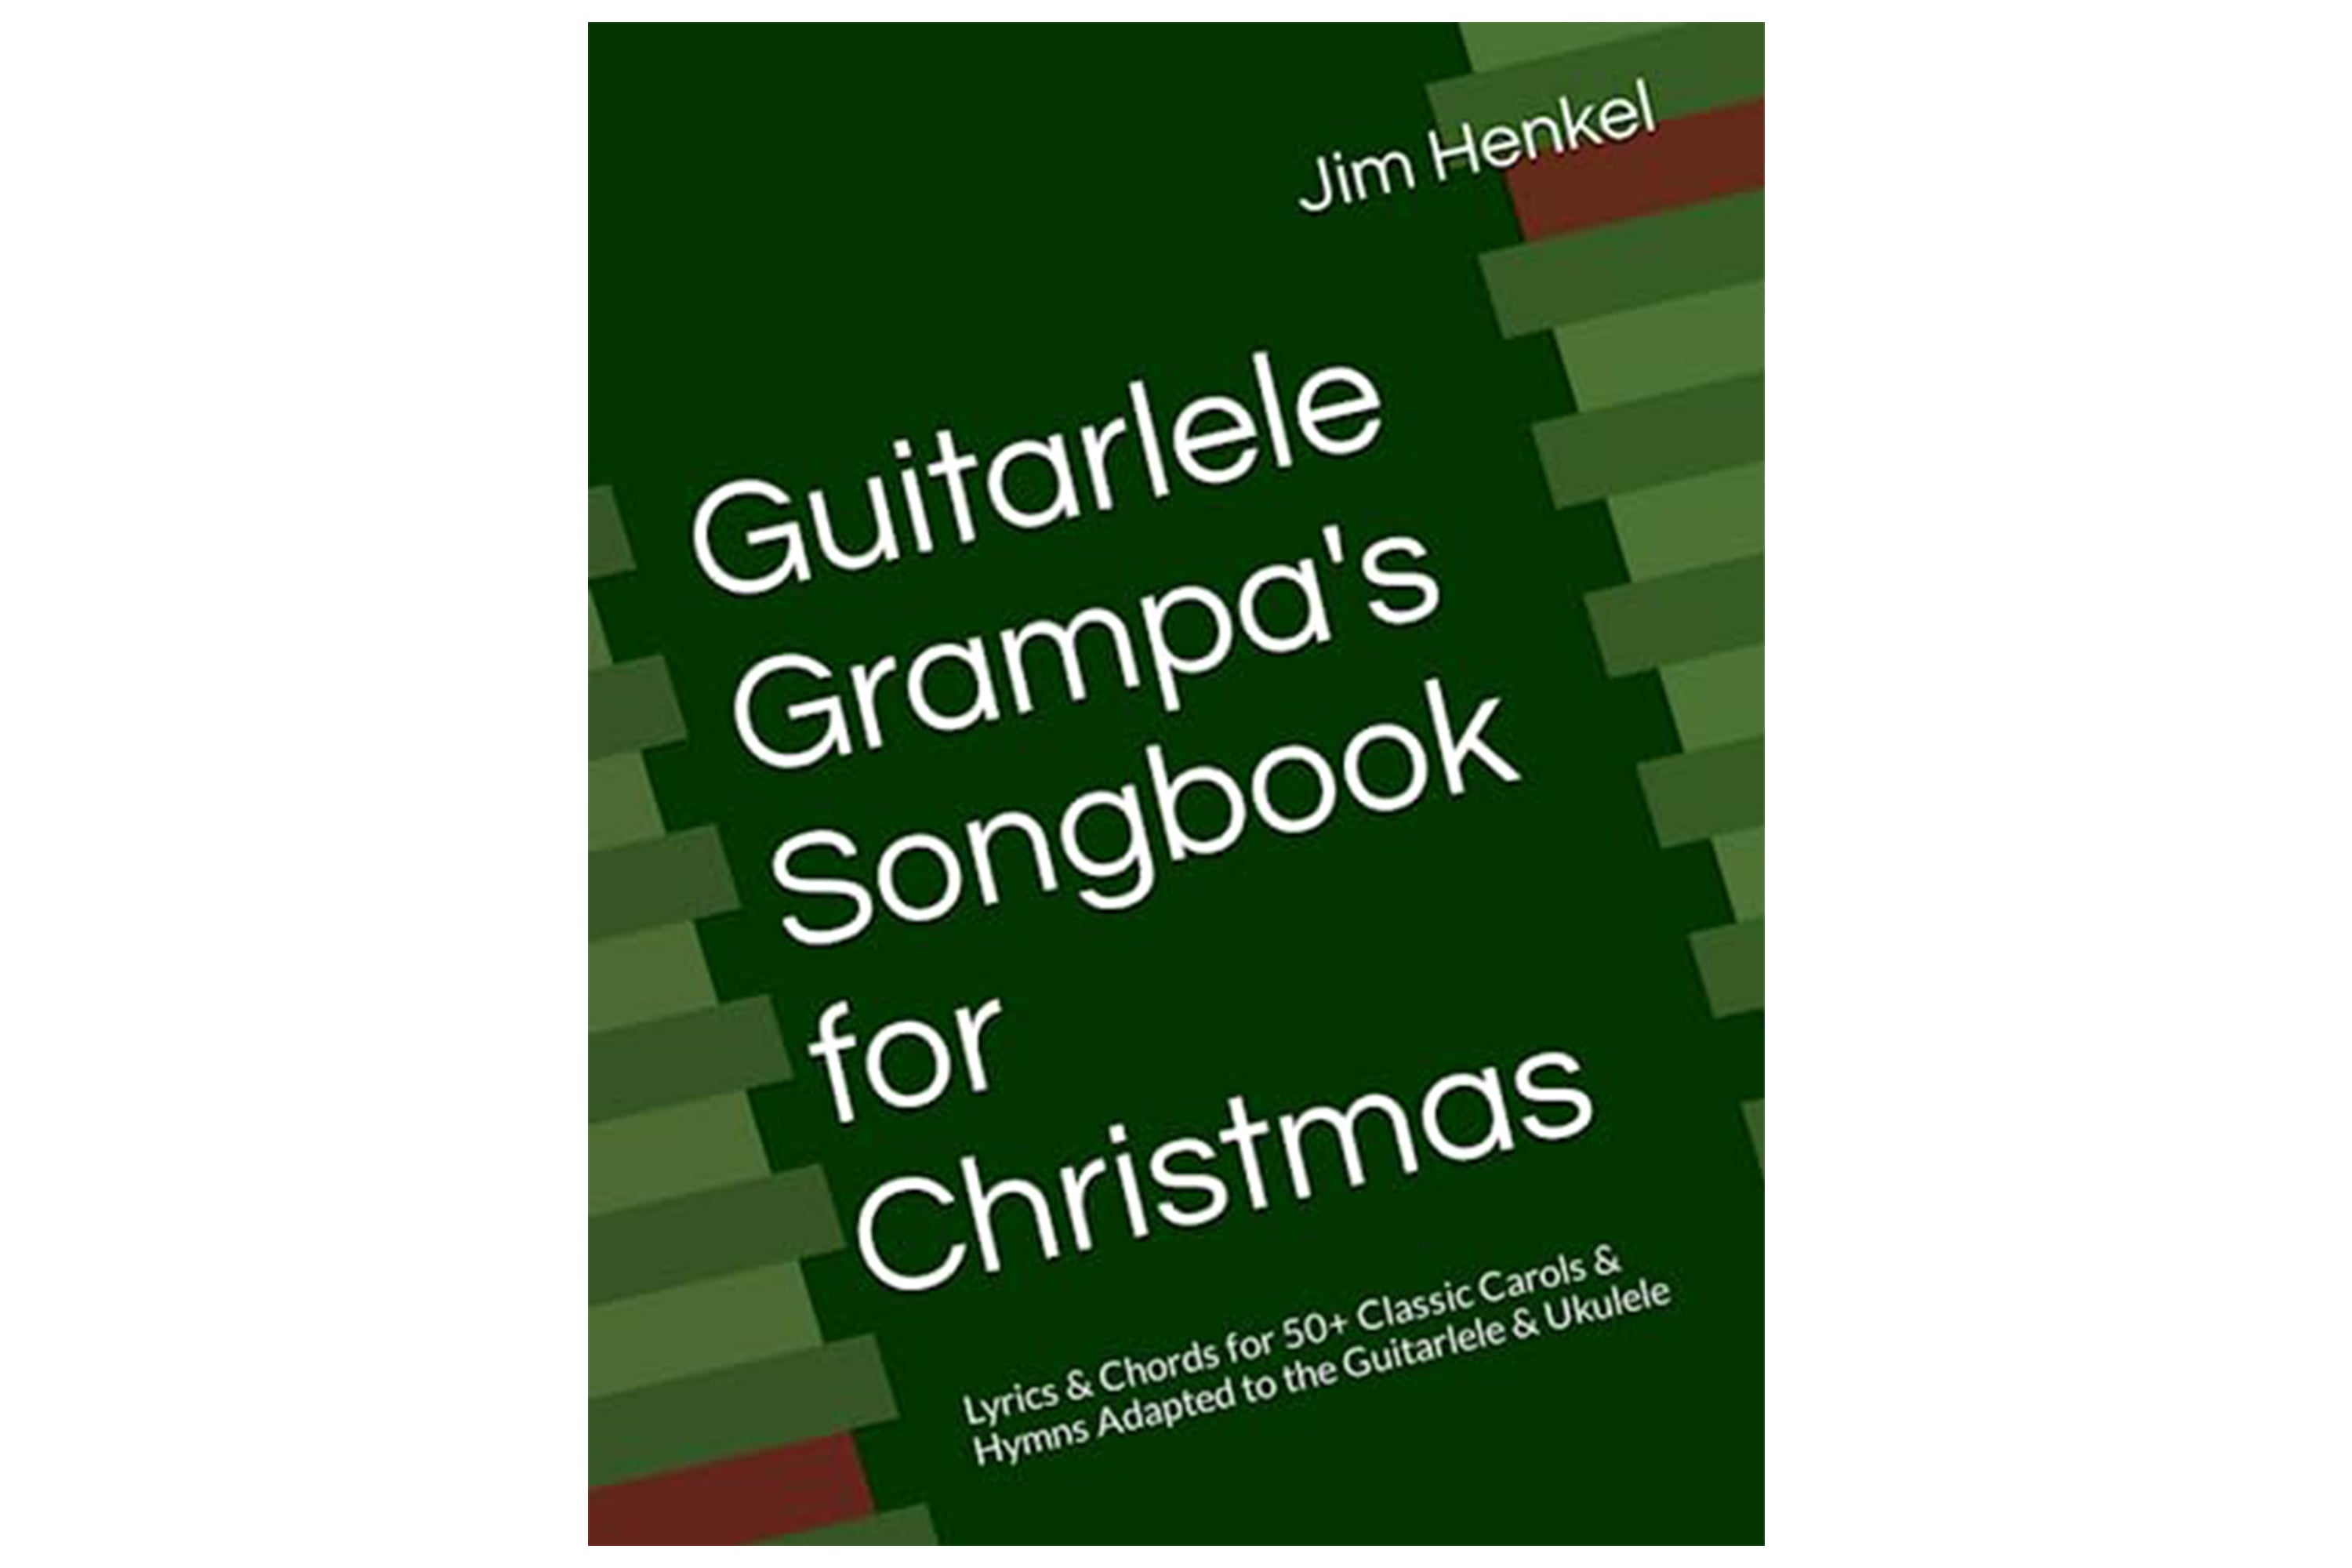 Guitarlele Grampa's Songbook for Christmas